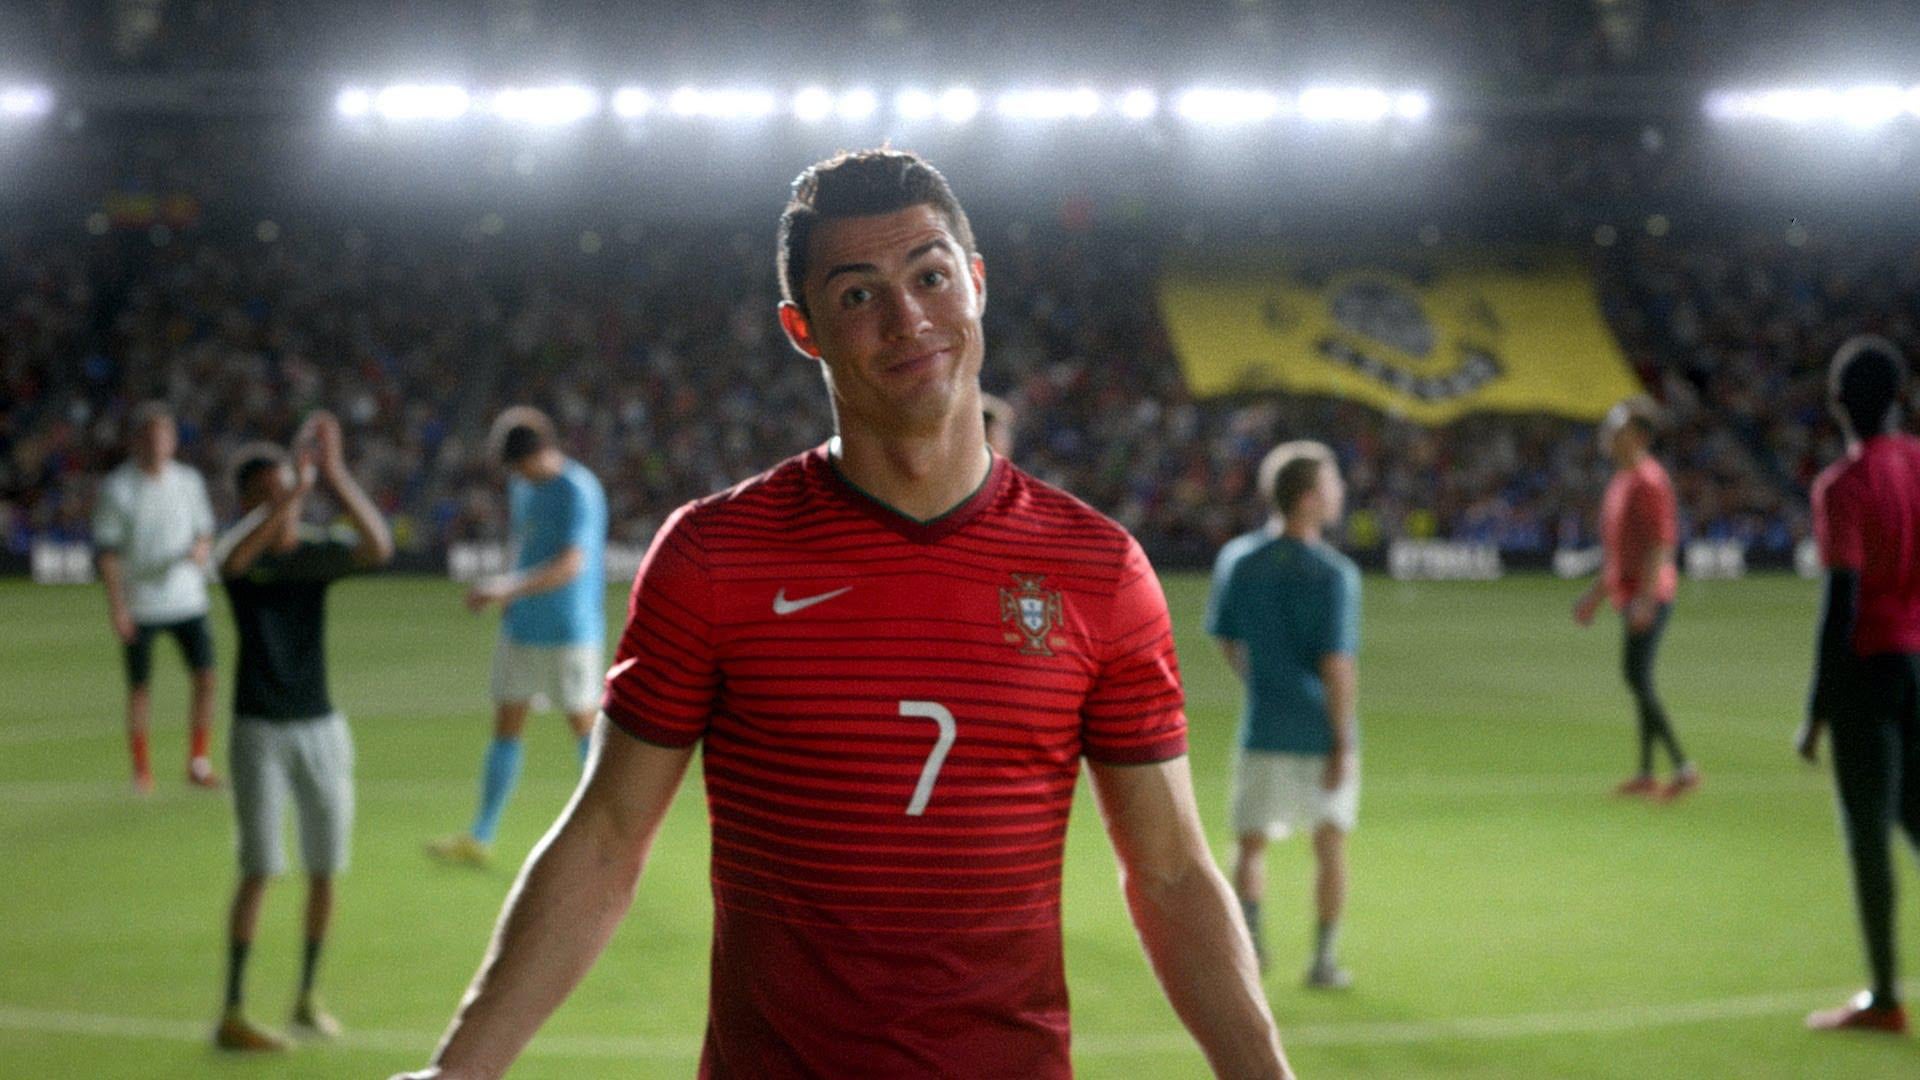 Bedenken tellen directory Nike's "Winner Stays" starring Cristiano Ronaldo, Wayne Rooney, and Neymar  is the perfect World Cup ad.